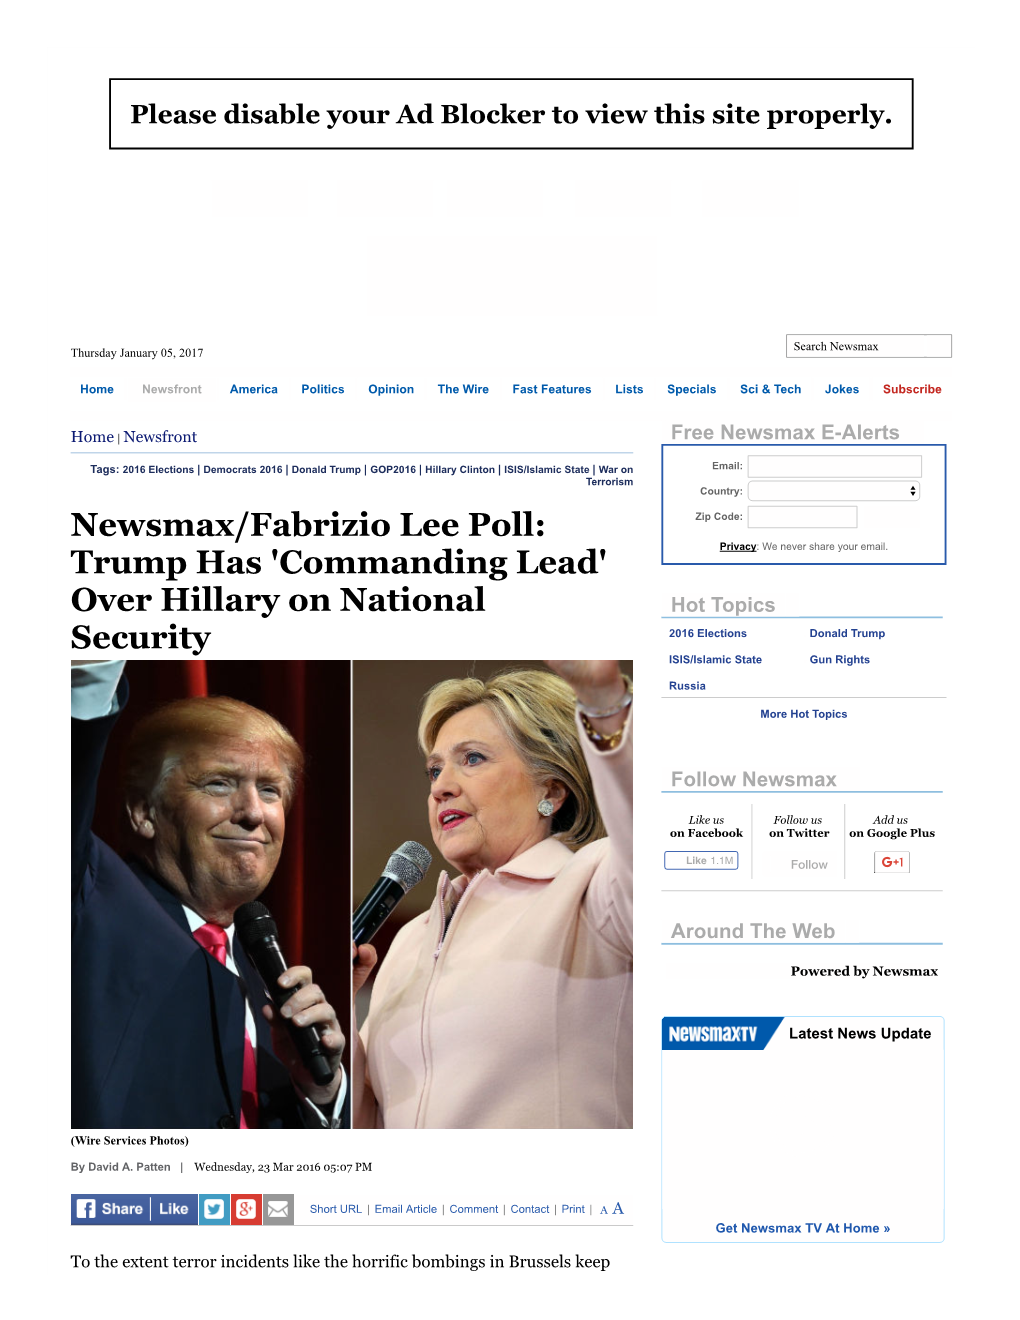 Newsmax/Fabrizio Lee Poll: Trump